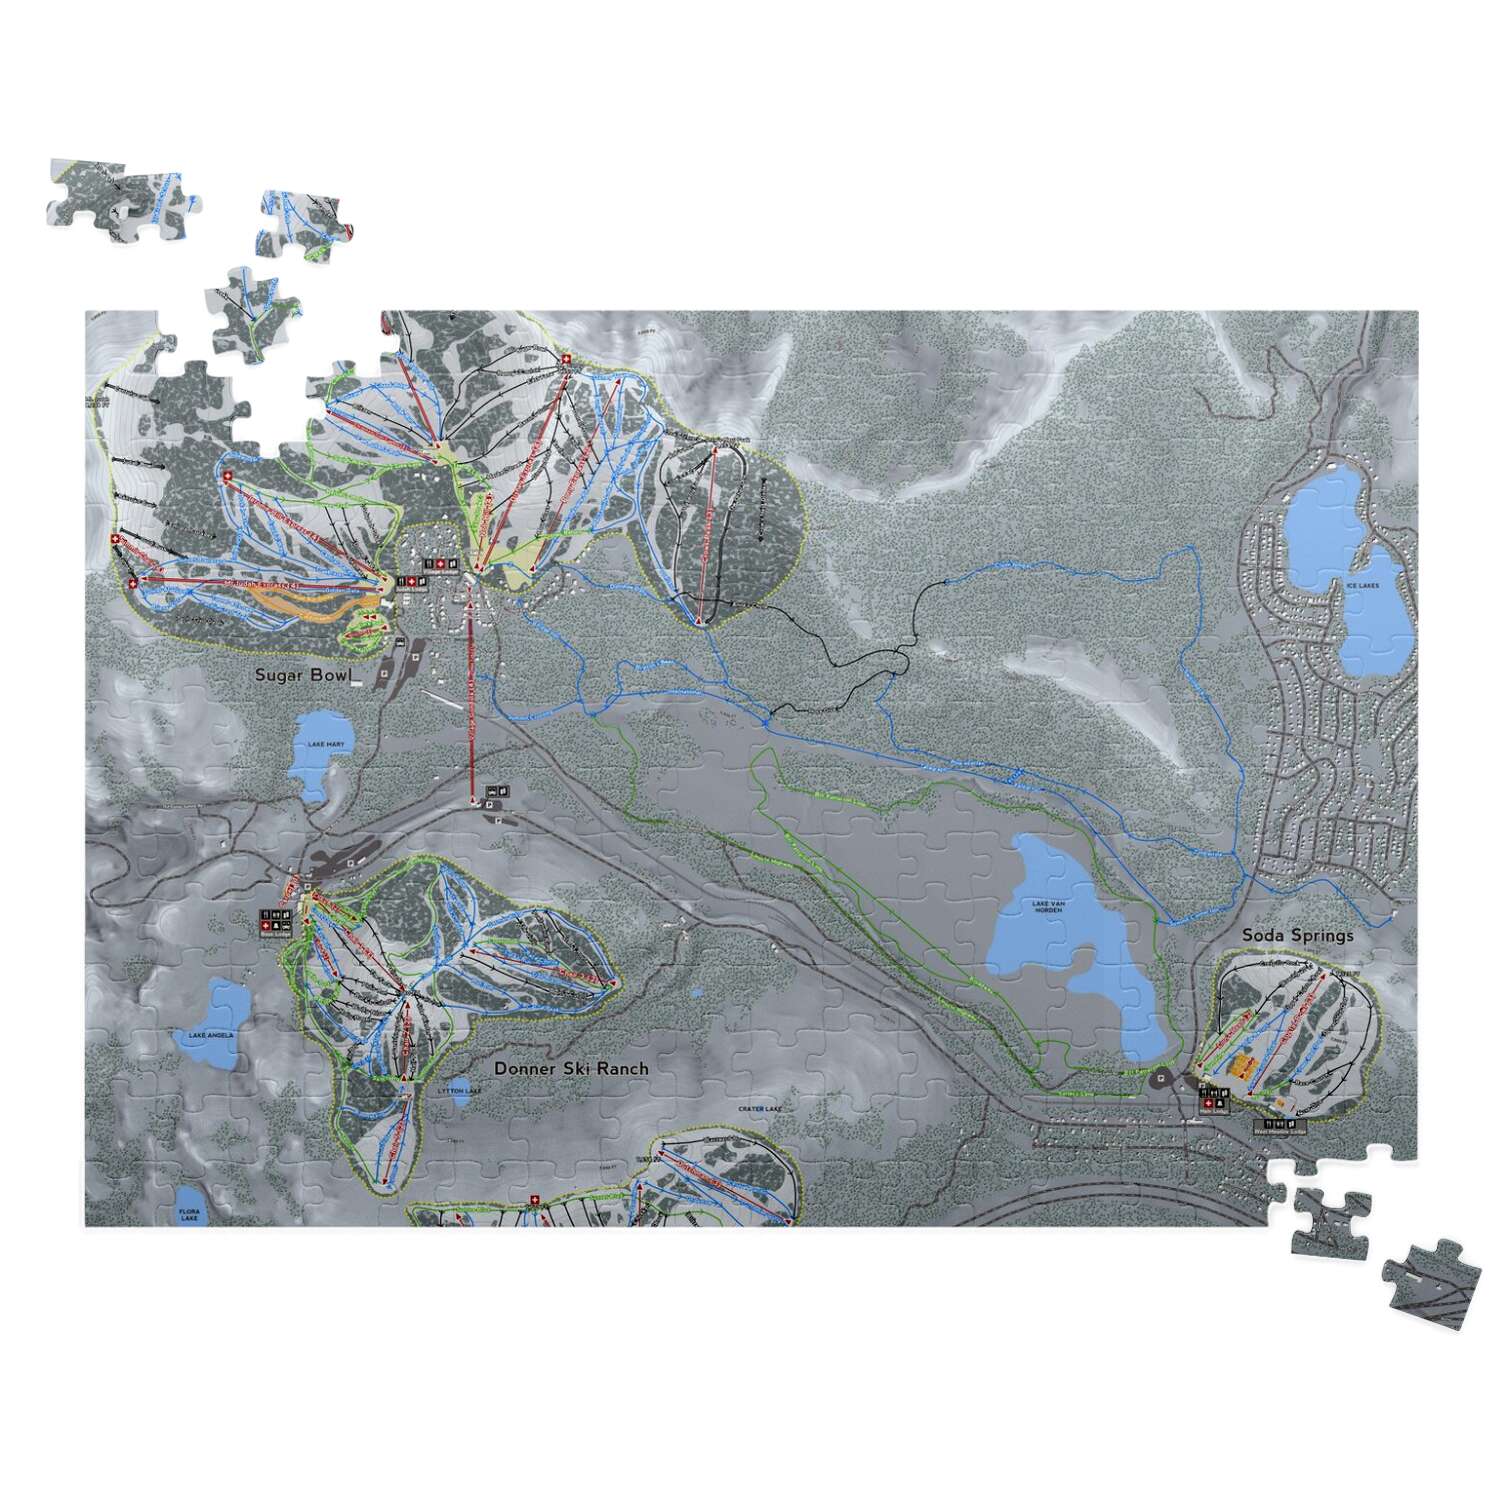 Donner Pass, California Ski Trail Map Puzzle - Powderaddicts